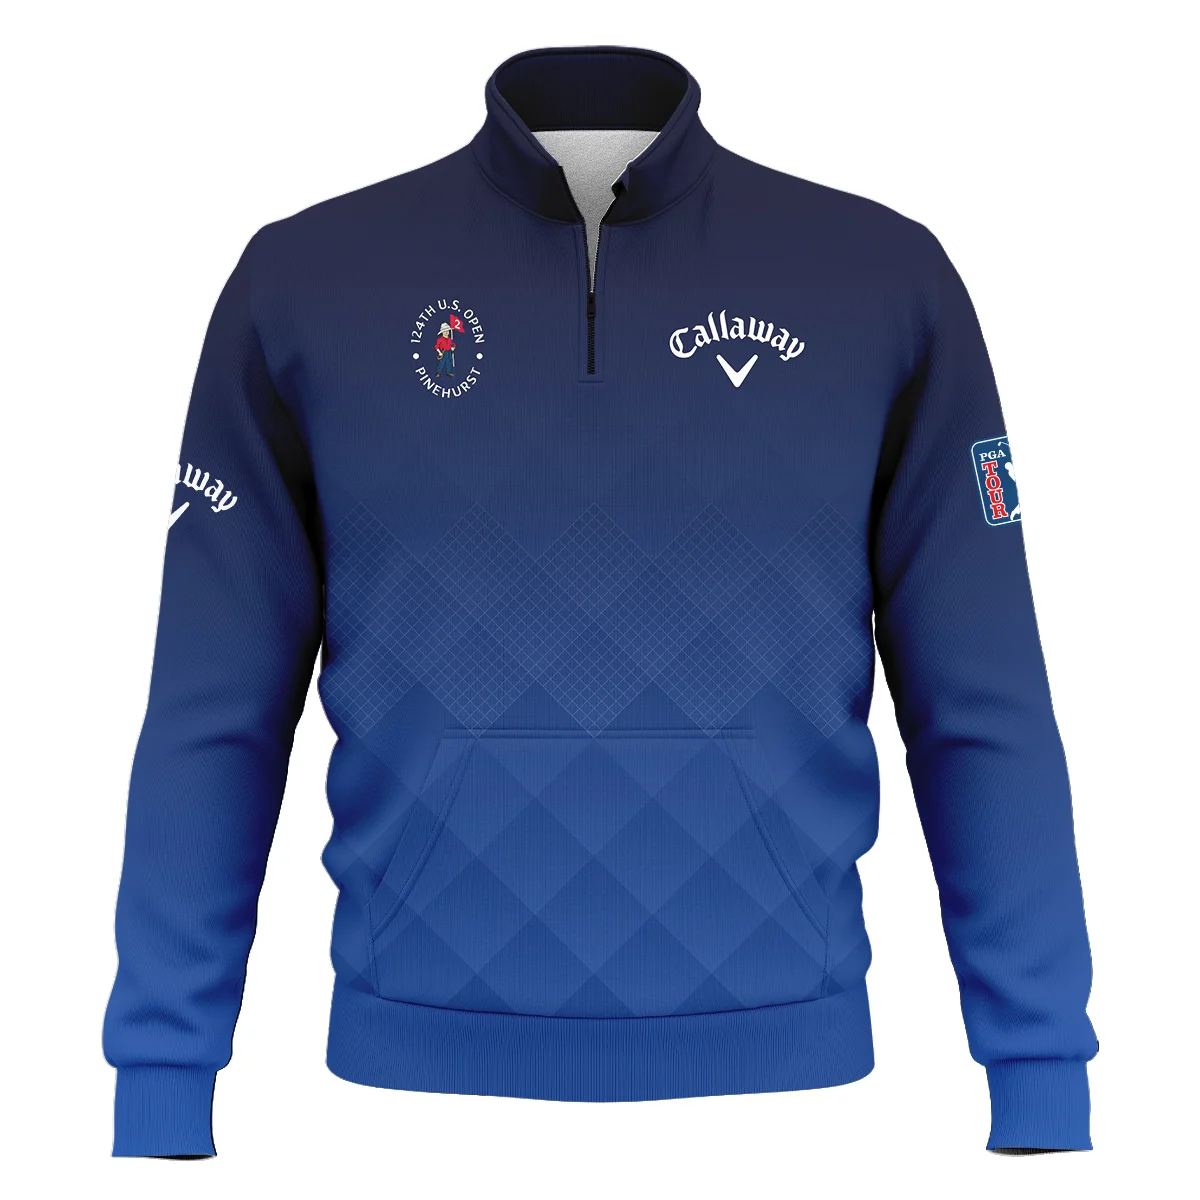 124th U.S. Open Pinehurst Callaway Dark Blue Gradient Stripes Pattern Quarter-Zip Jacket Style Classic Quarter-Zip Jacket